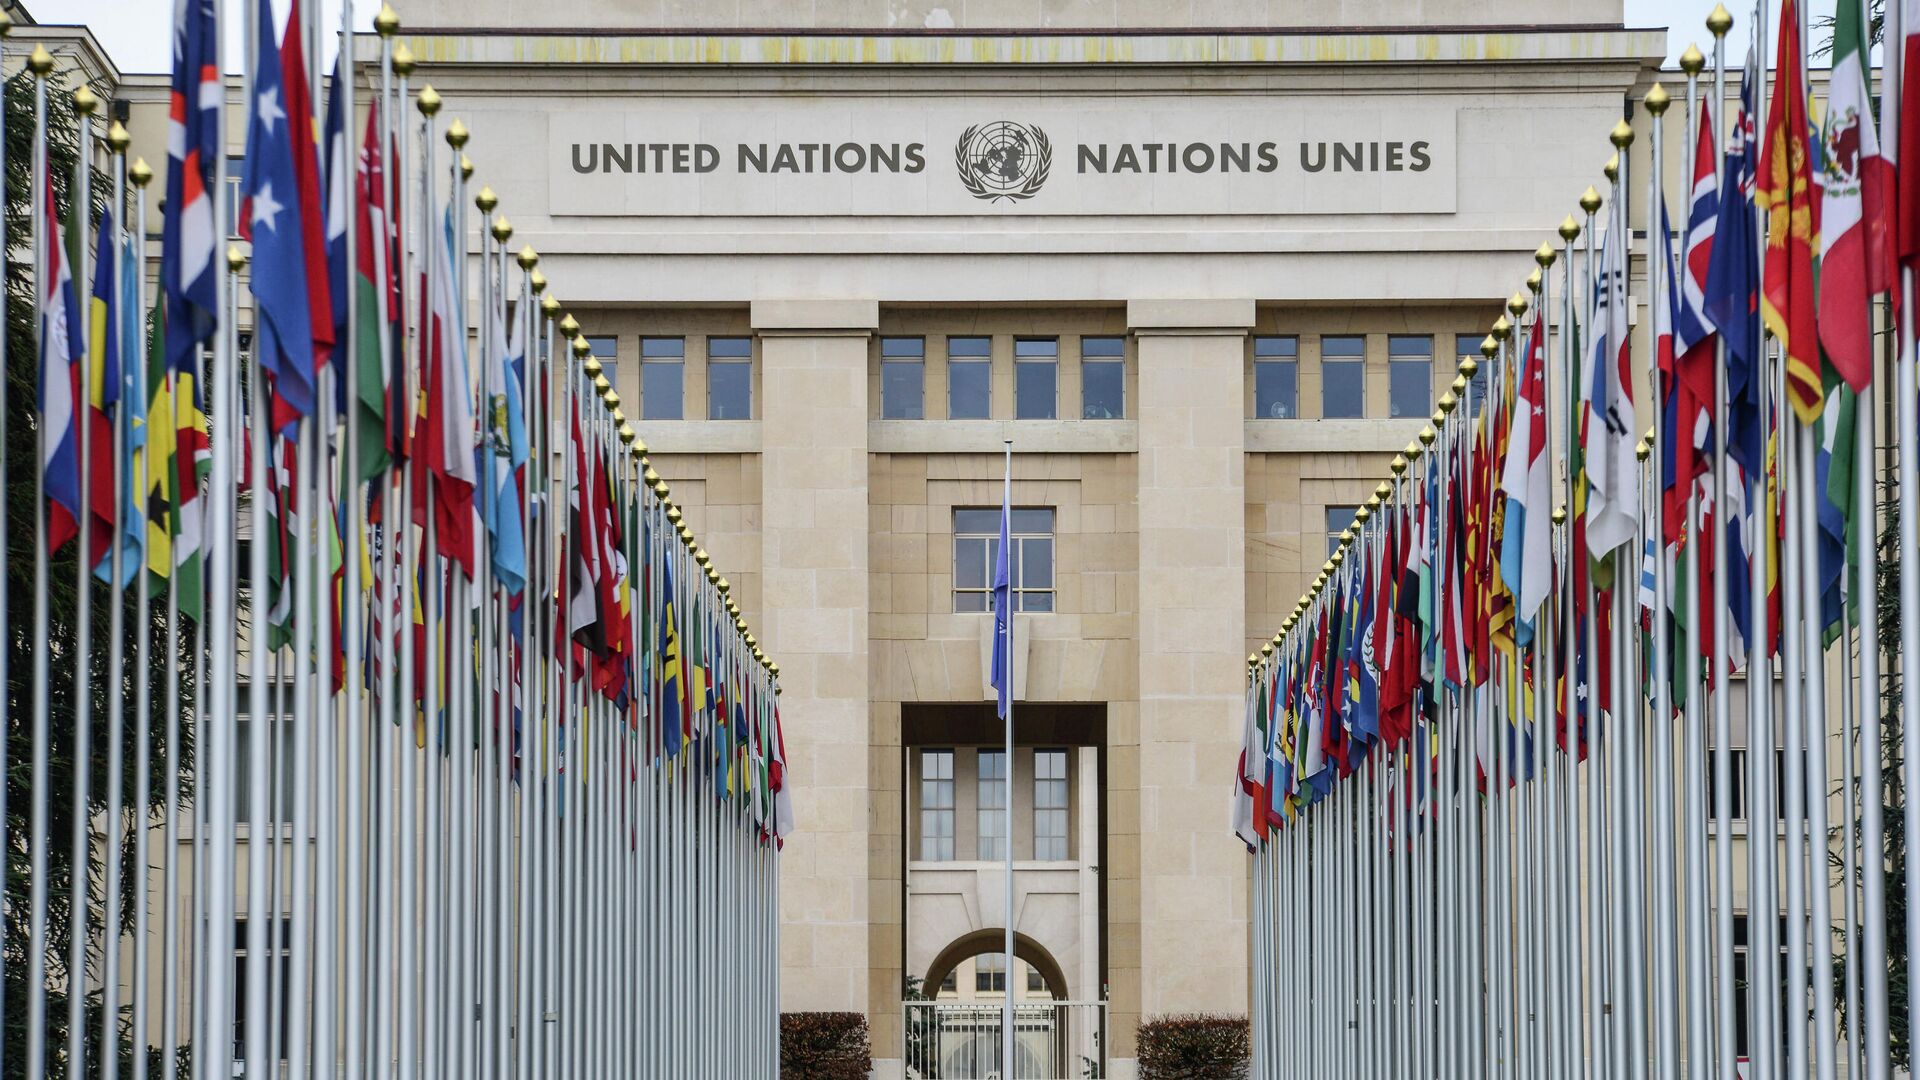 Аллея флагов возле здания ООН в Женеве - РИА Новости, 1920, 24.10.2020